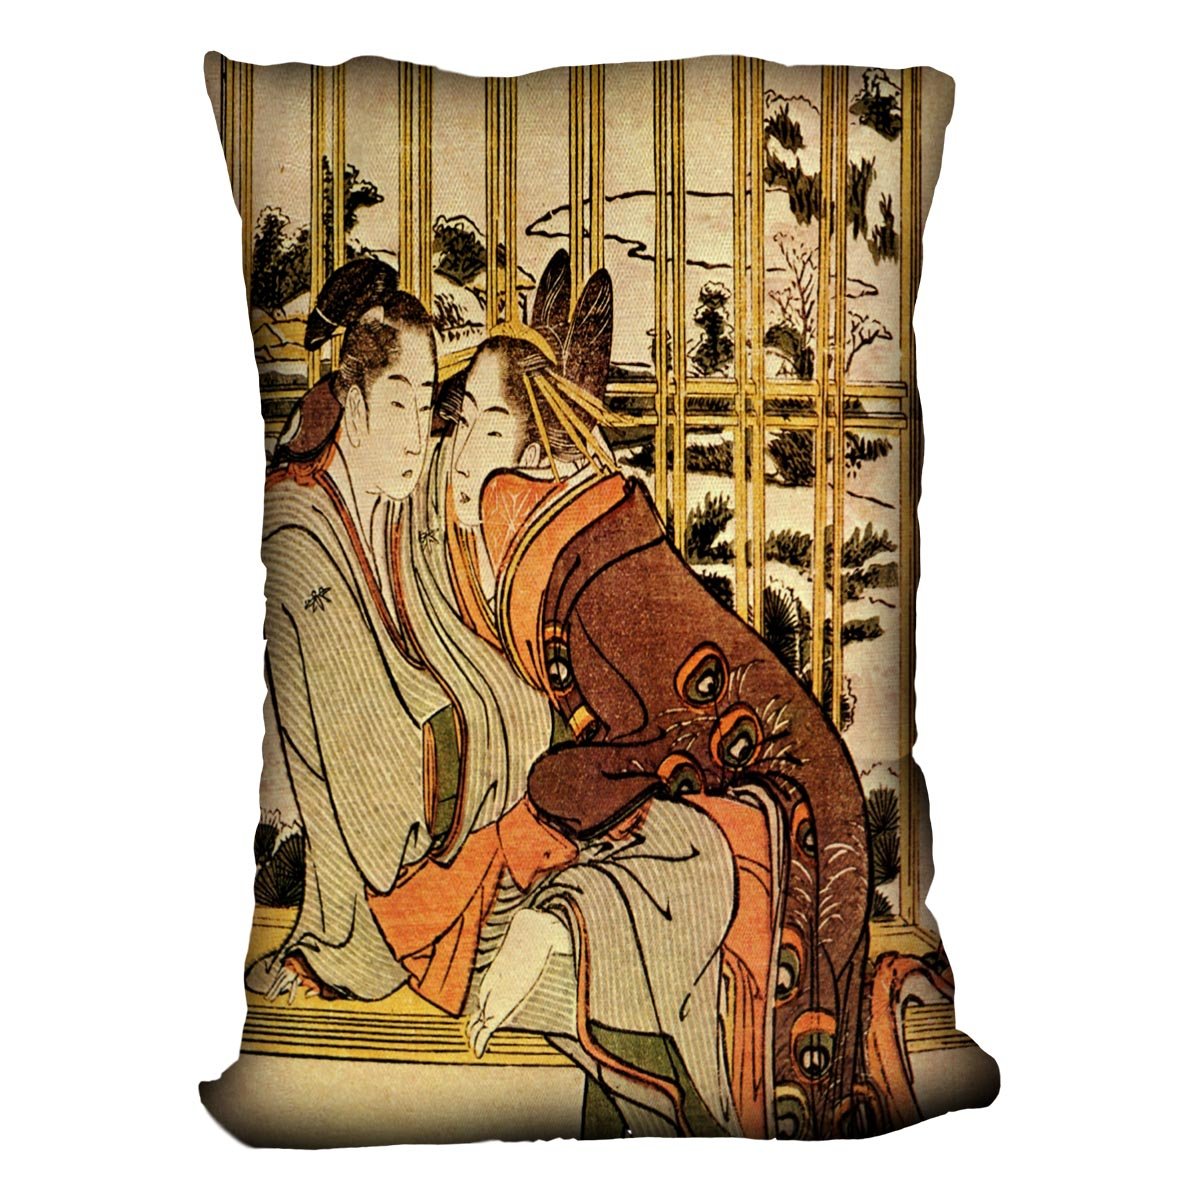 Couples by Hokusai Throw Pillow